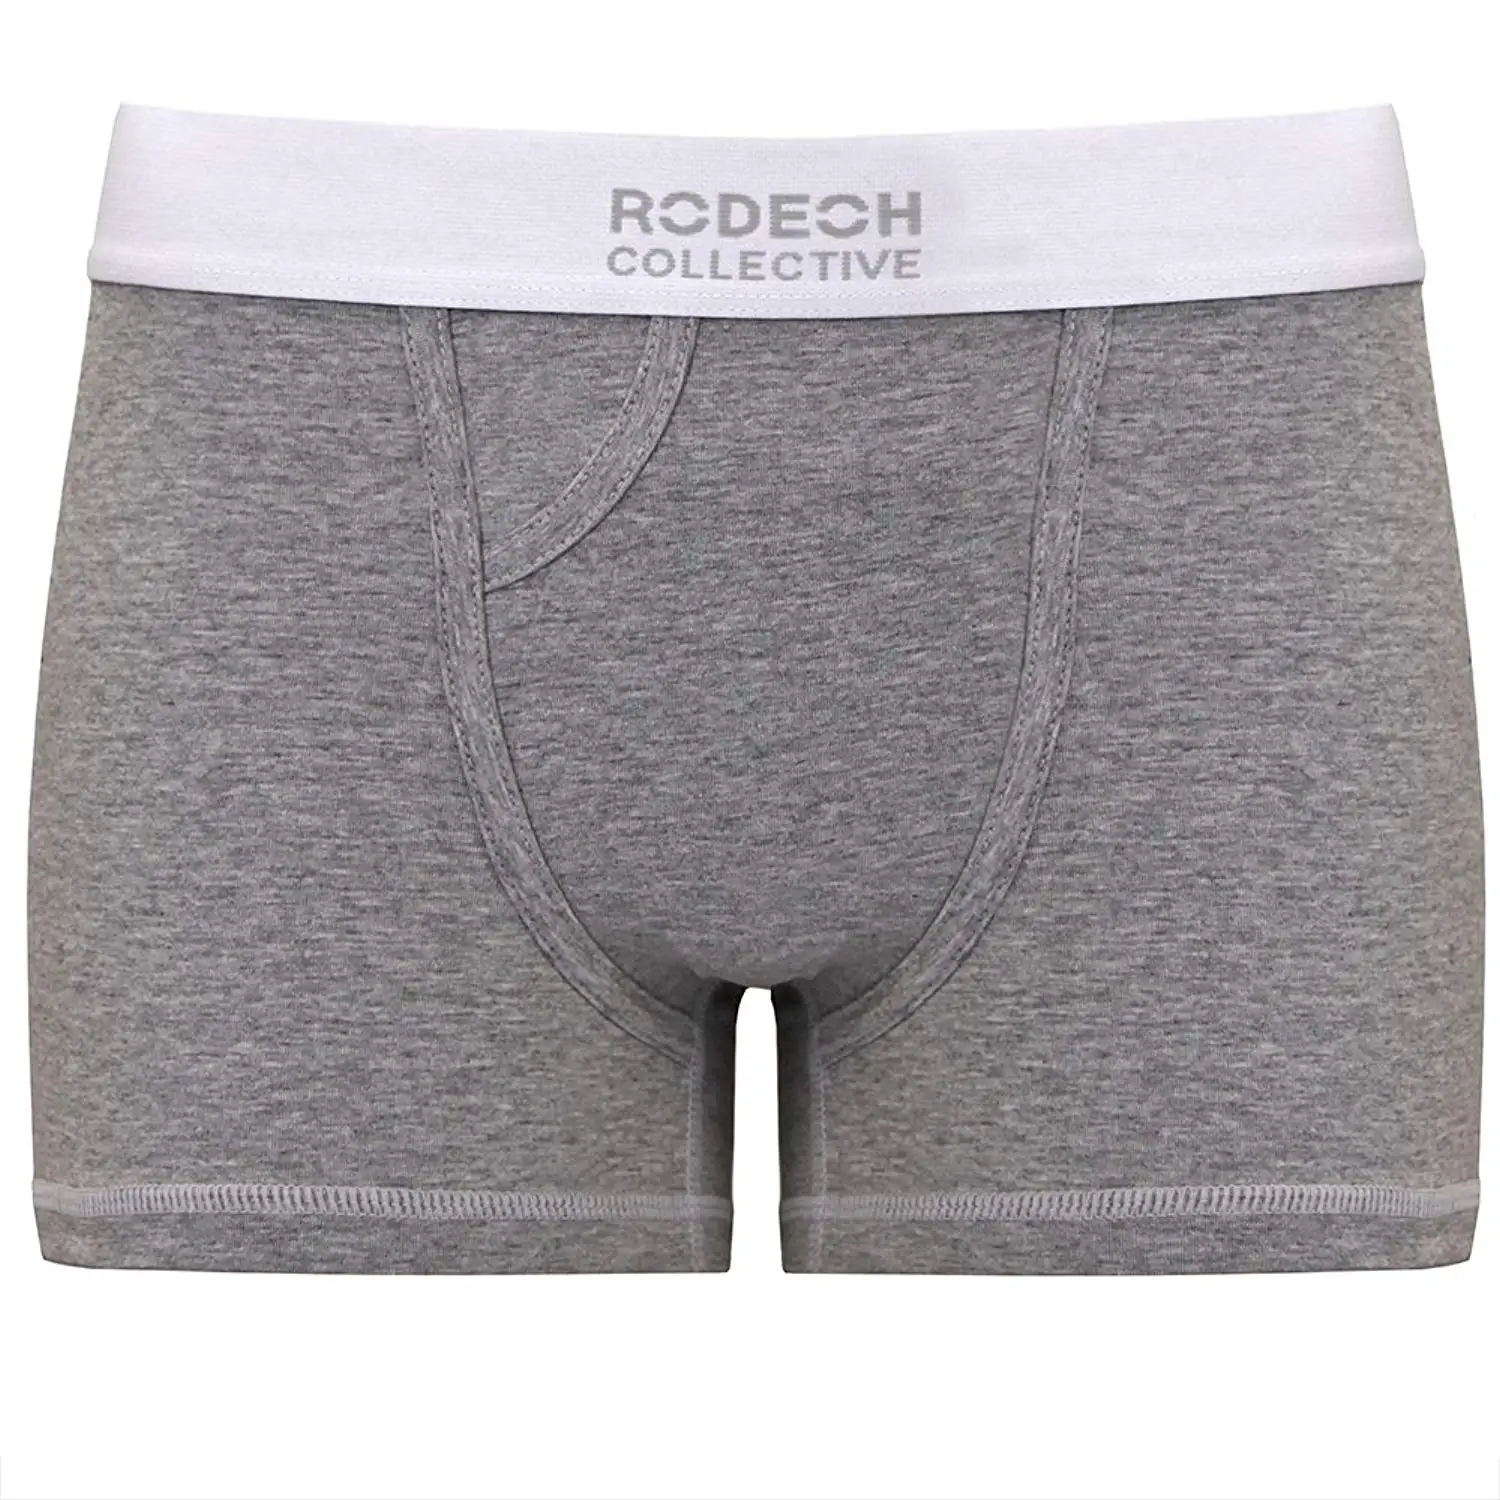 RodeoH Classic Packer Boxer Underwear - Gray Marle - FTM Transgender. 